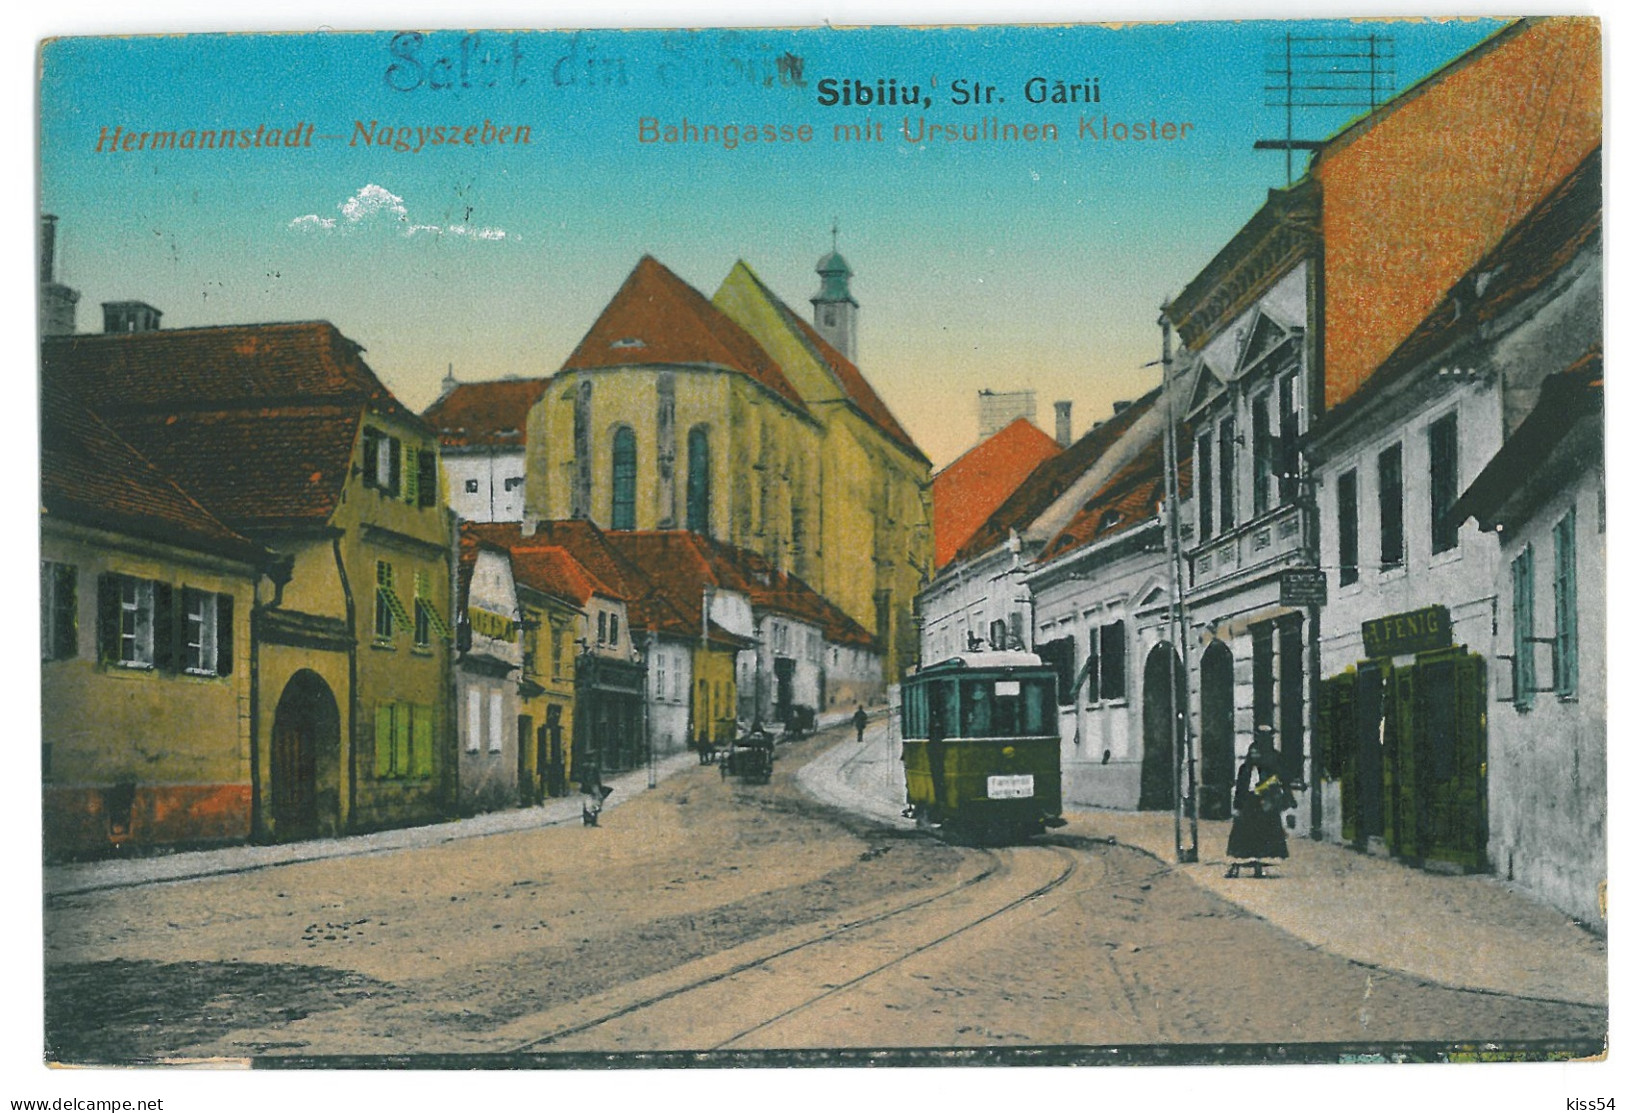 RO 09 - 22407 SIBIU, Tramway, Romania - Old Postcard - Used - 1926 - Rumänien